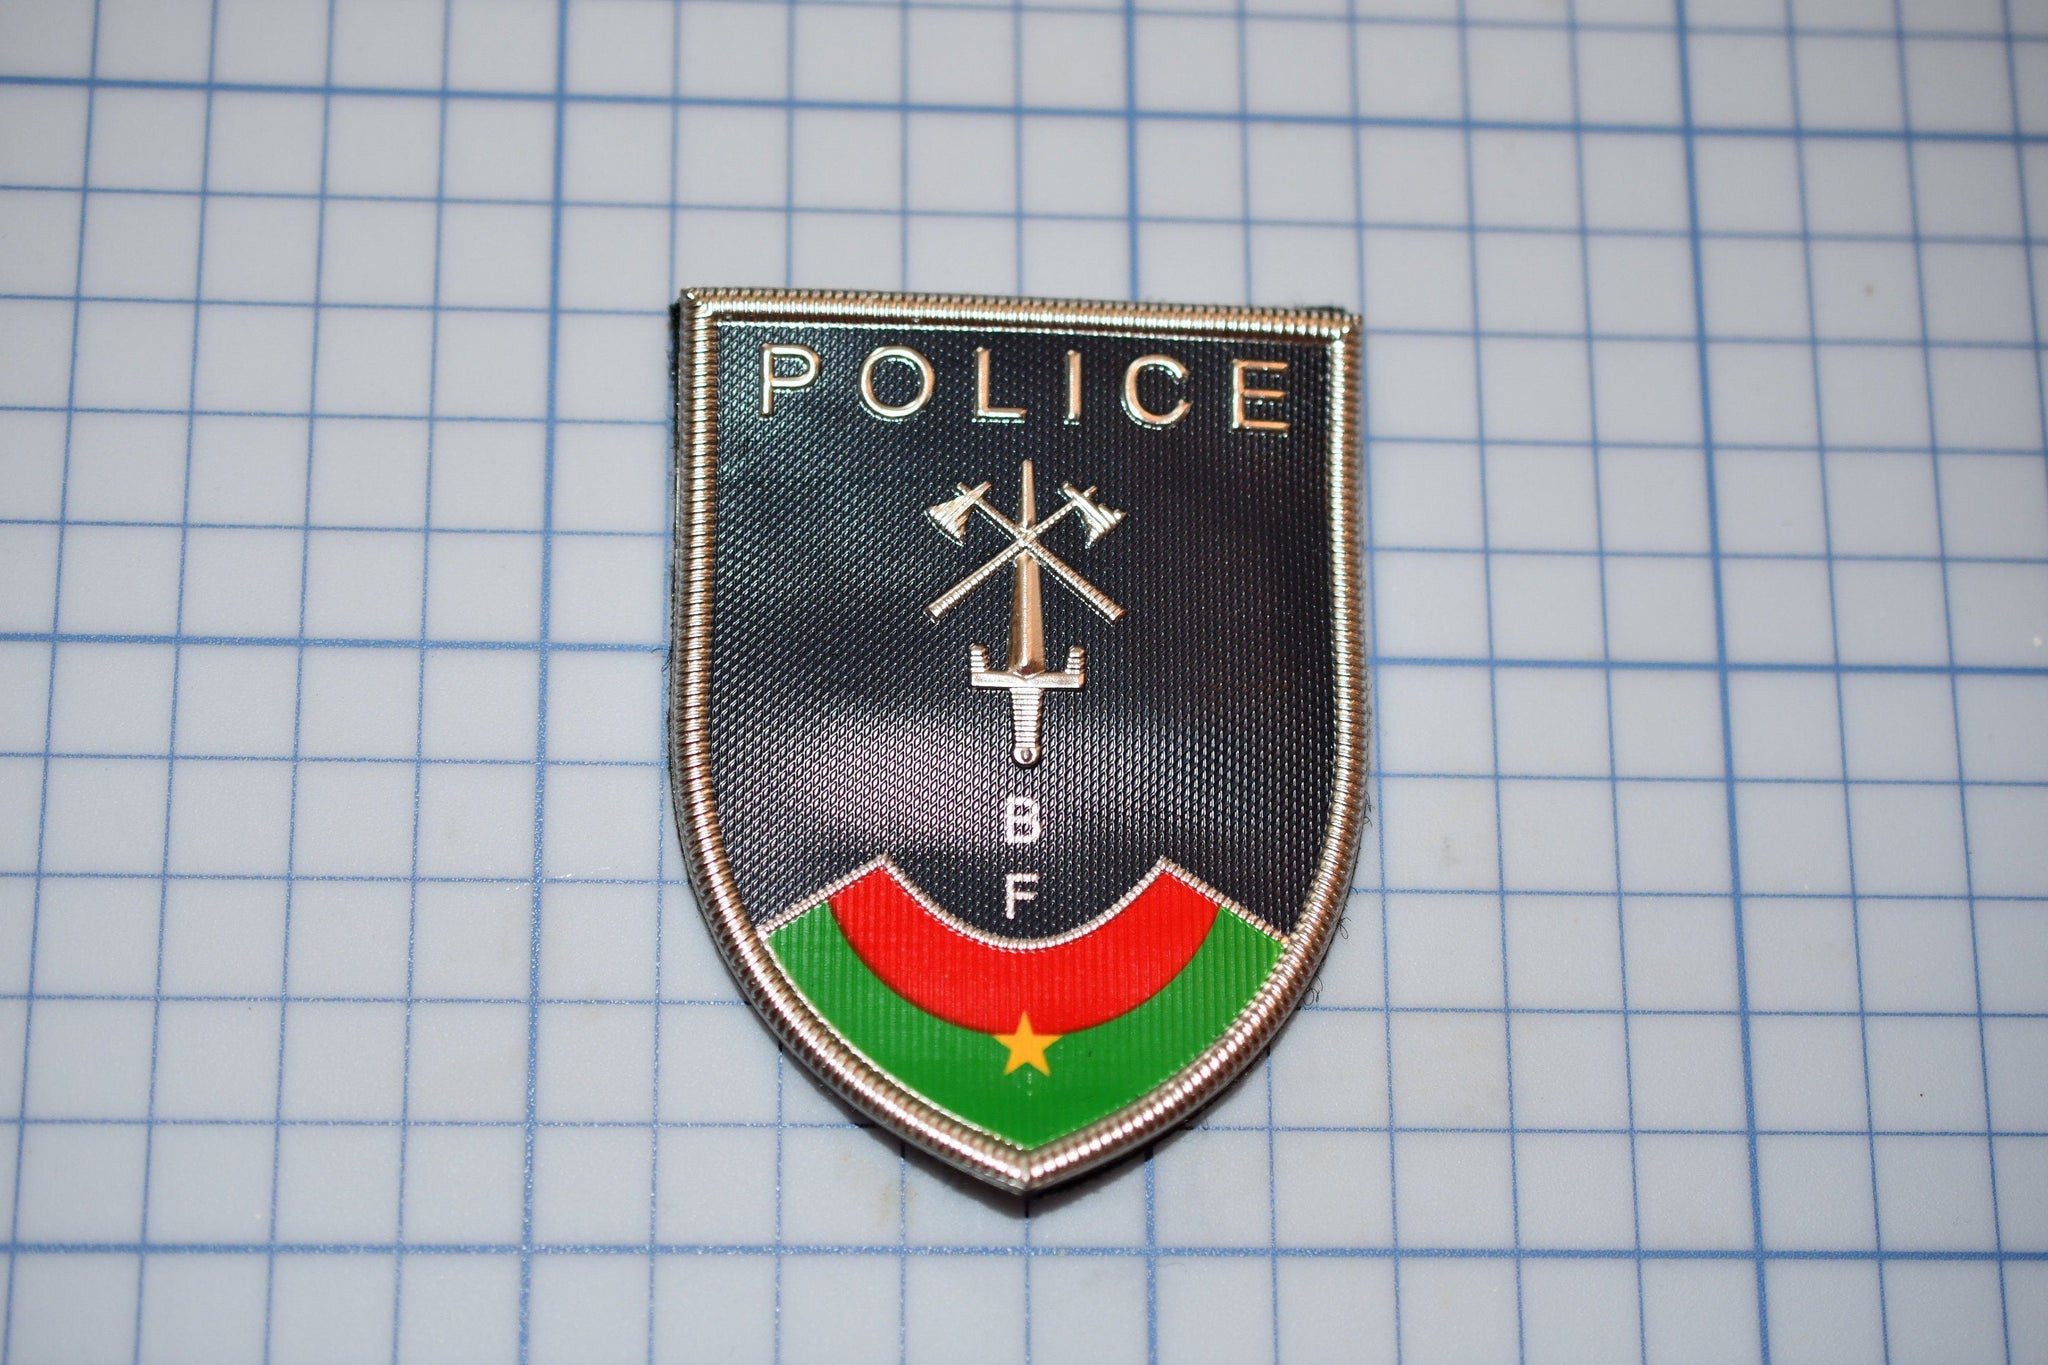 Burkina Faso Police Patch (Plastic) (Hook & Loop) (S2)